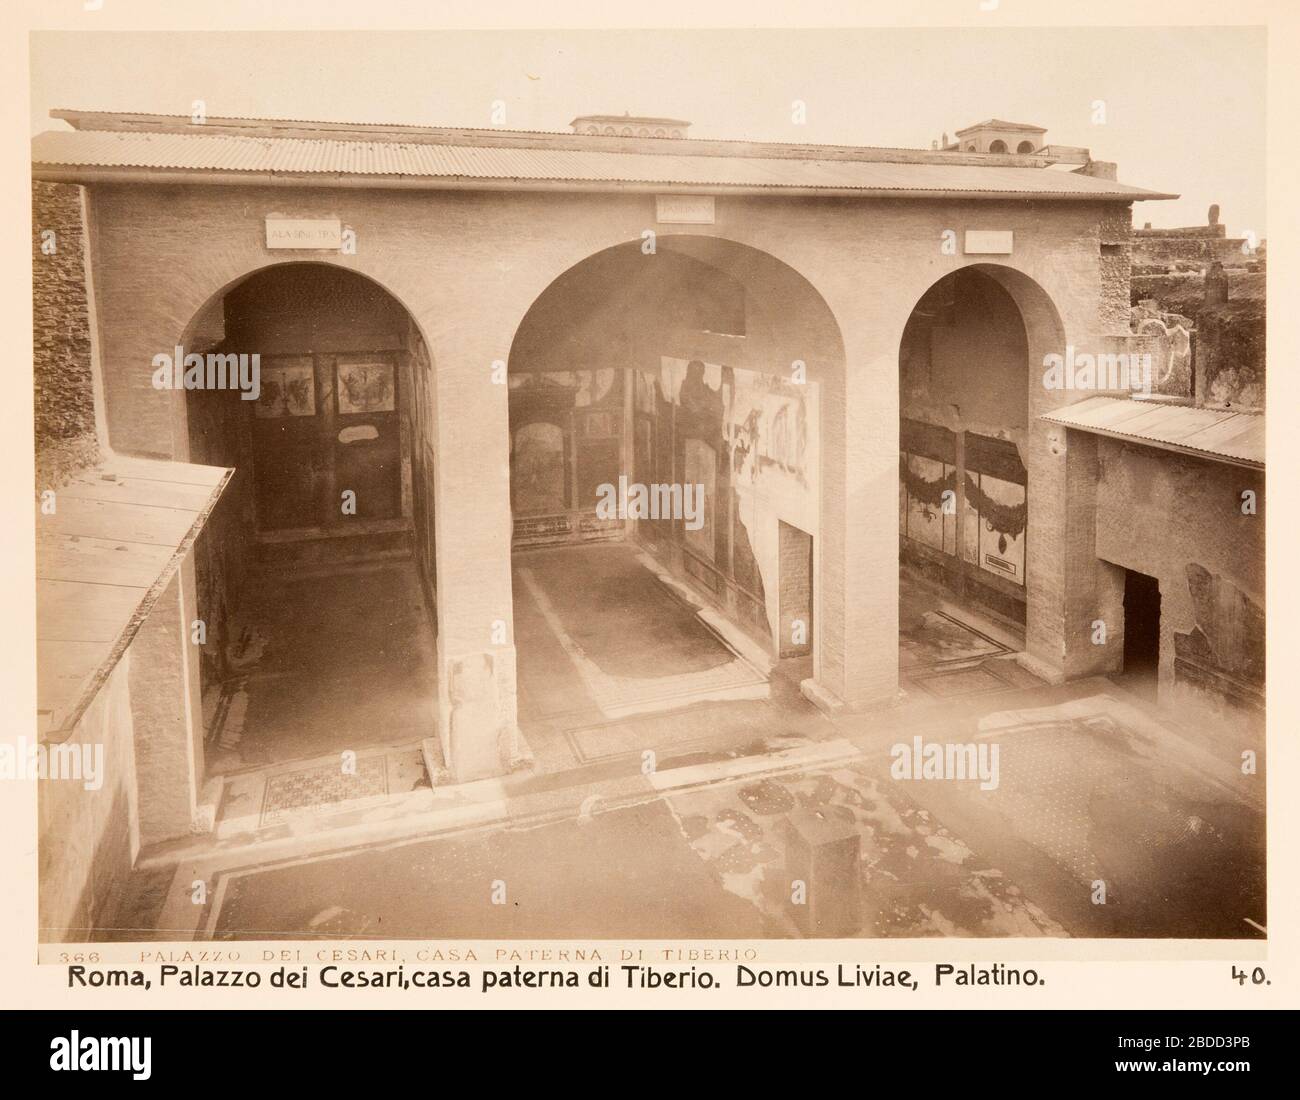 "Fotografier; Fotografi av Roma. Palazzo dei Cesari, Casa paterna di Tiberio (Domus Liviae), Palatino; Unbekanntes Datum; LSH 104722 (hm dig18191); ' Stockfoto